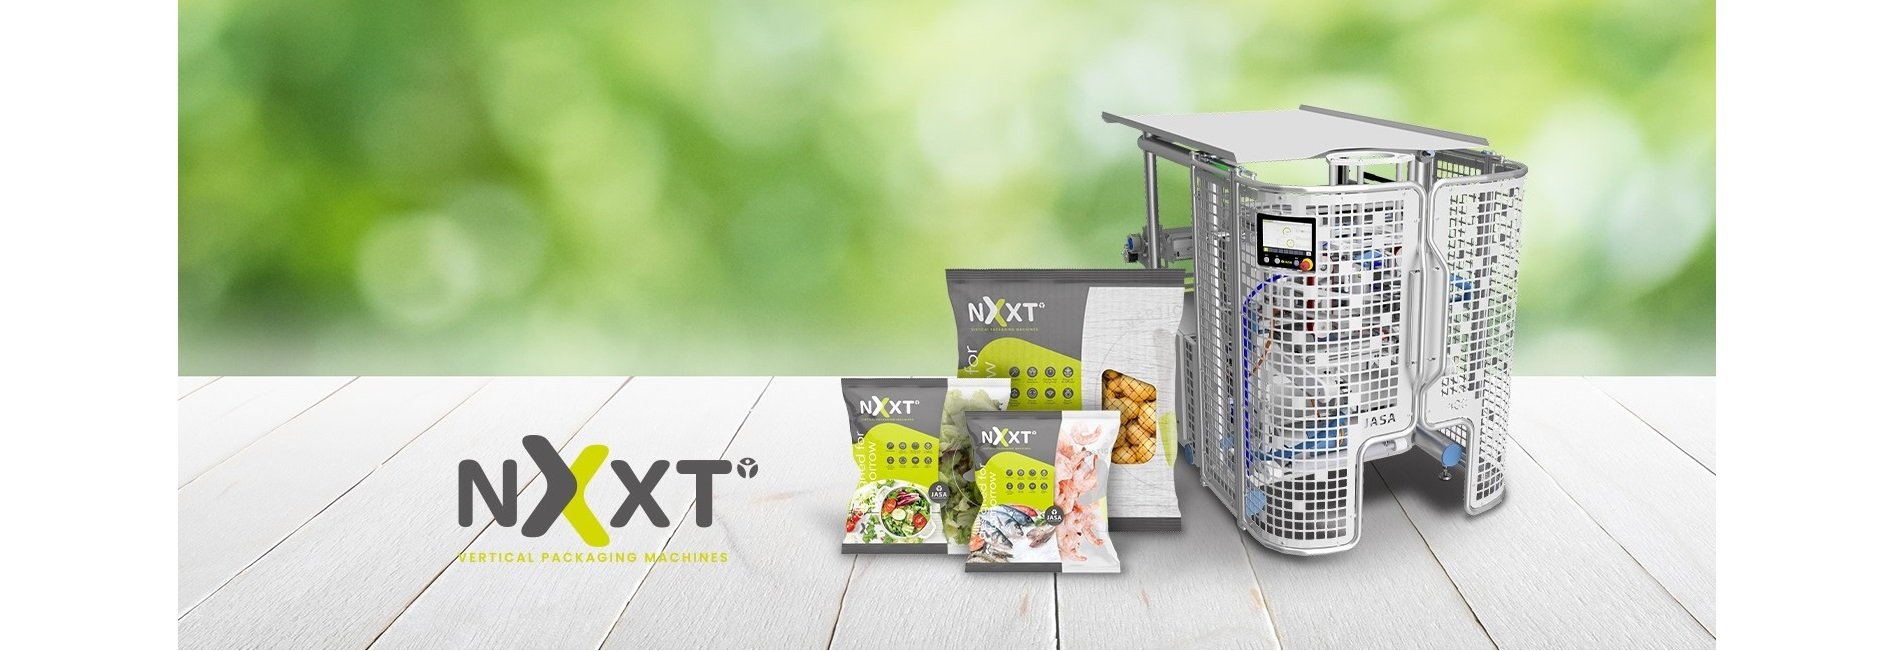 NXXT vertical packaging machine